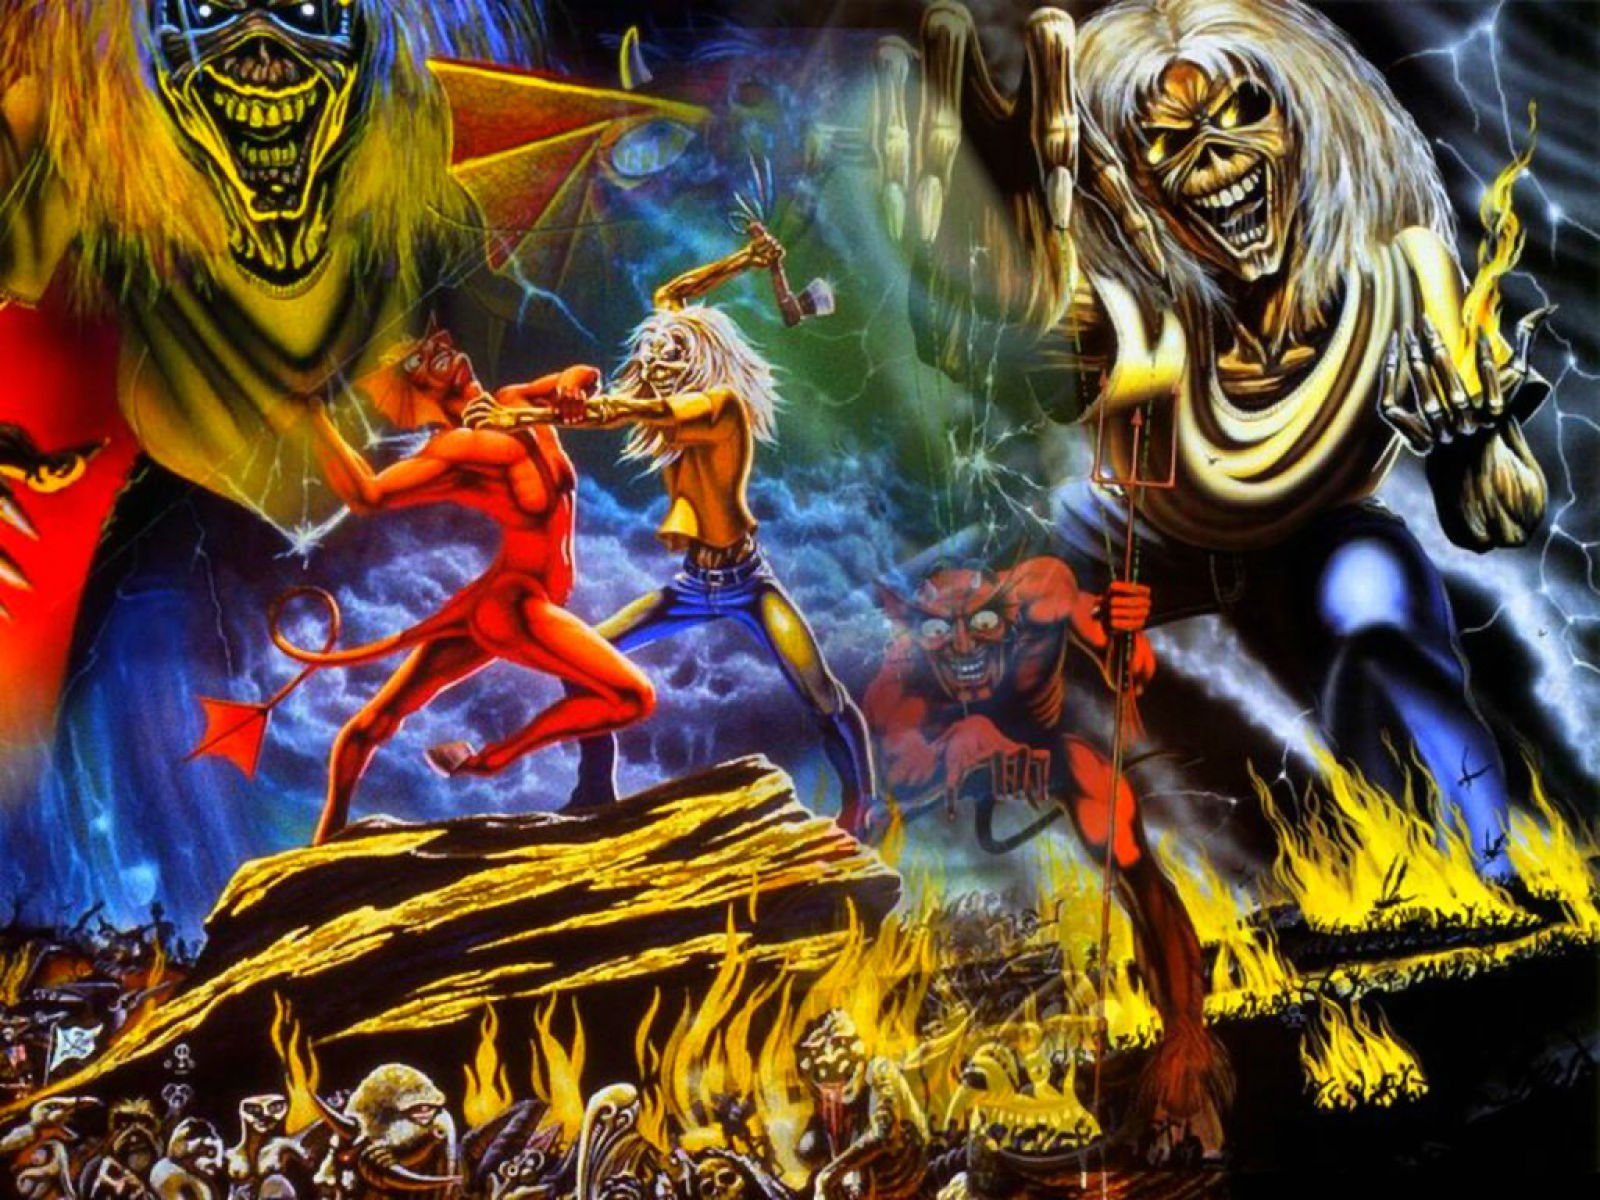 Iron Maiden Computer Wallpapers, Desktop Backgrounds | 1600x1200 ...